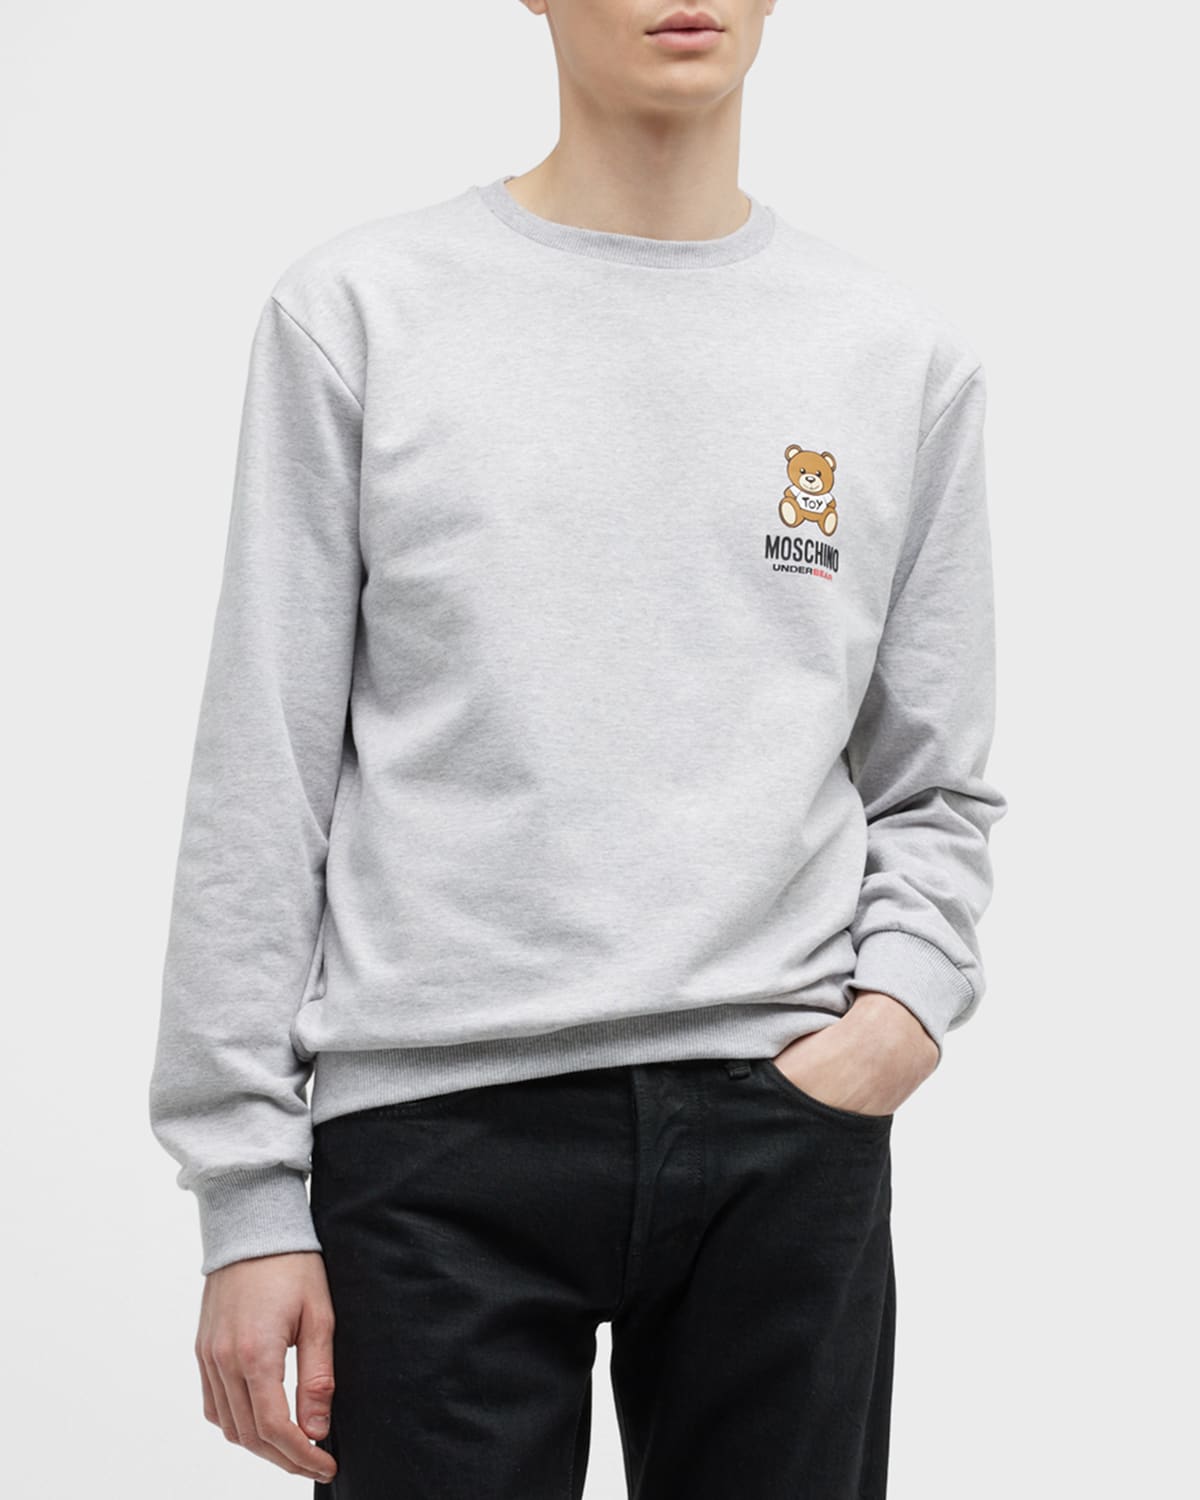 Men's Sweatshirt with Teddy Bear Logo